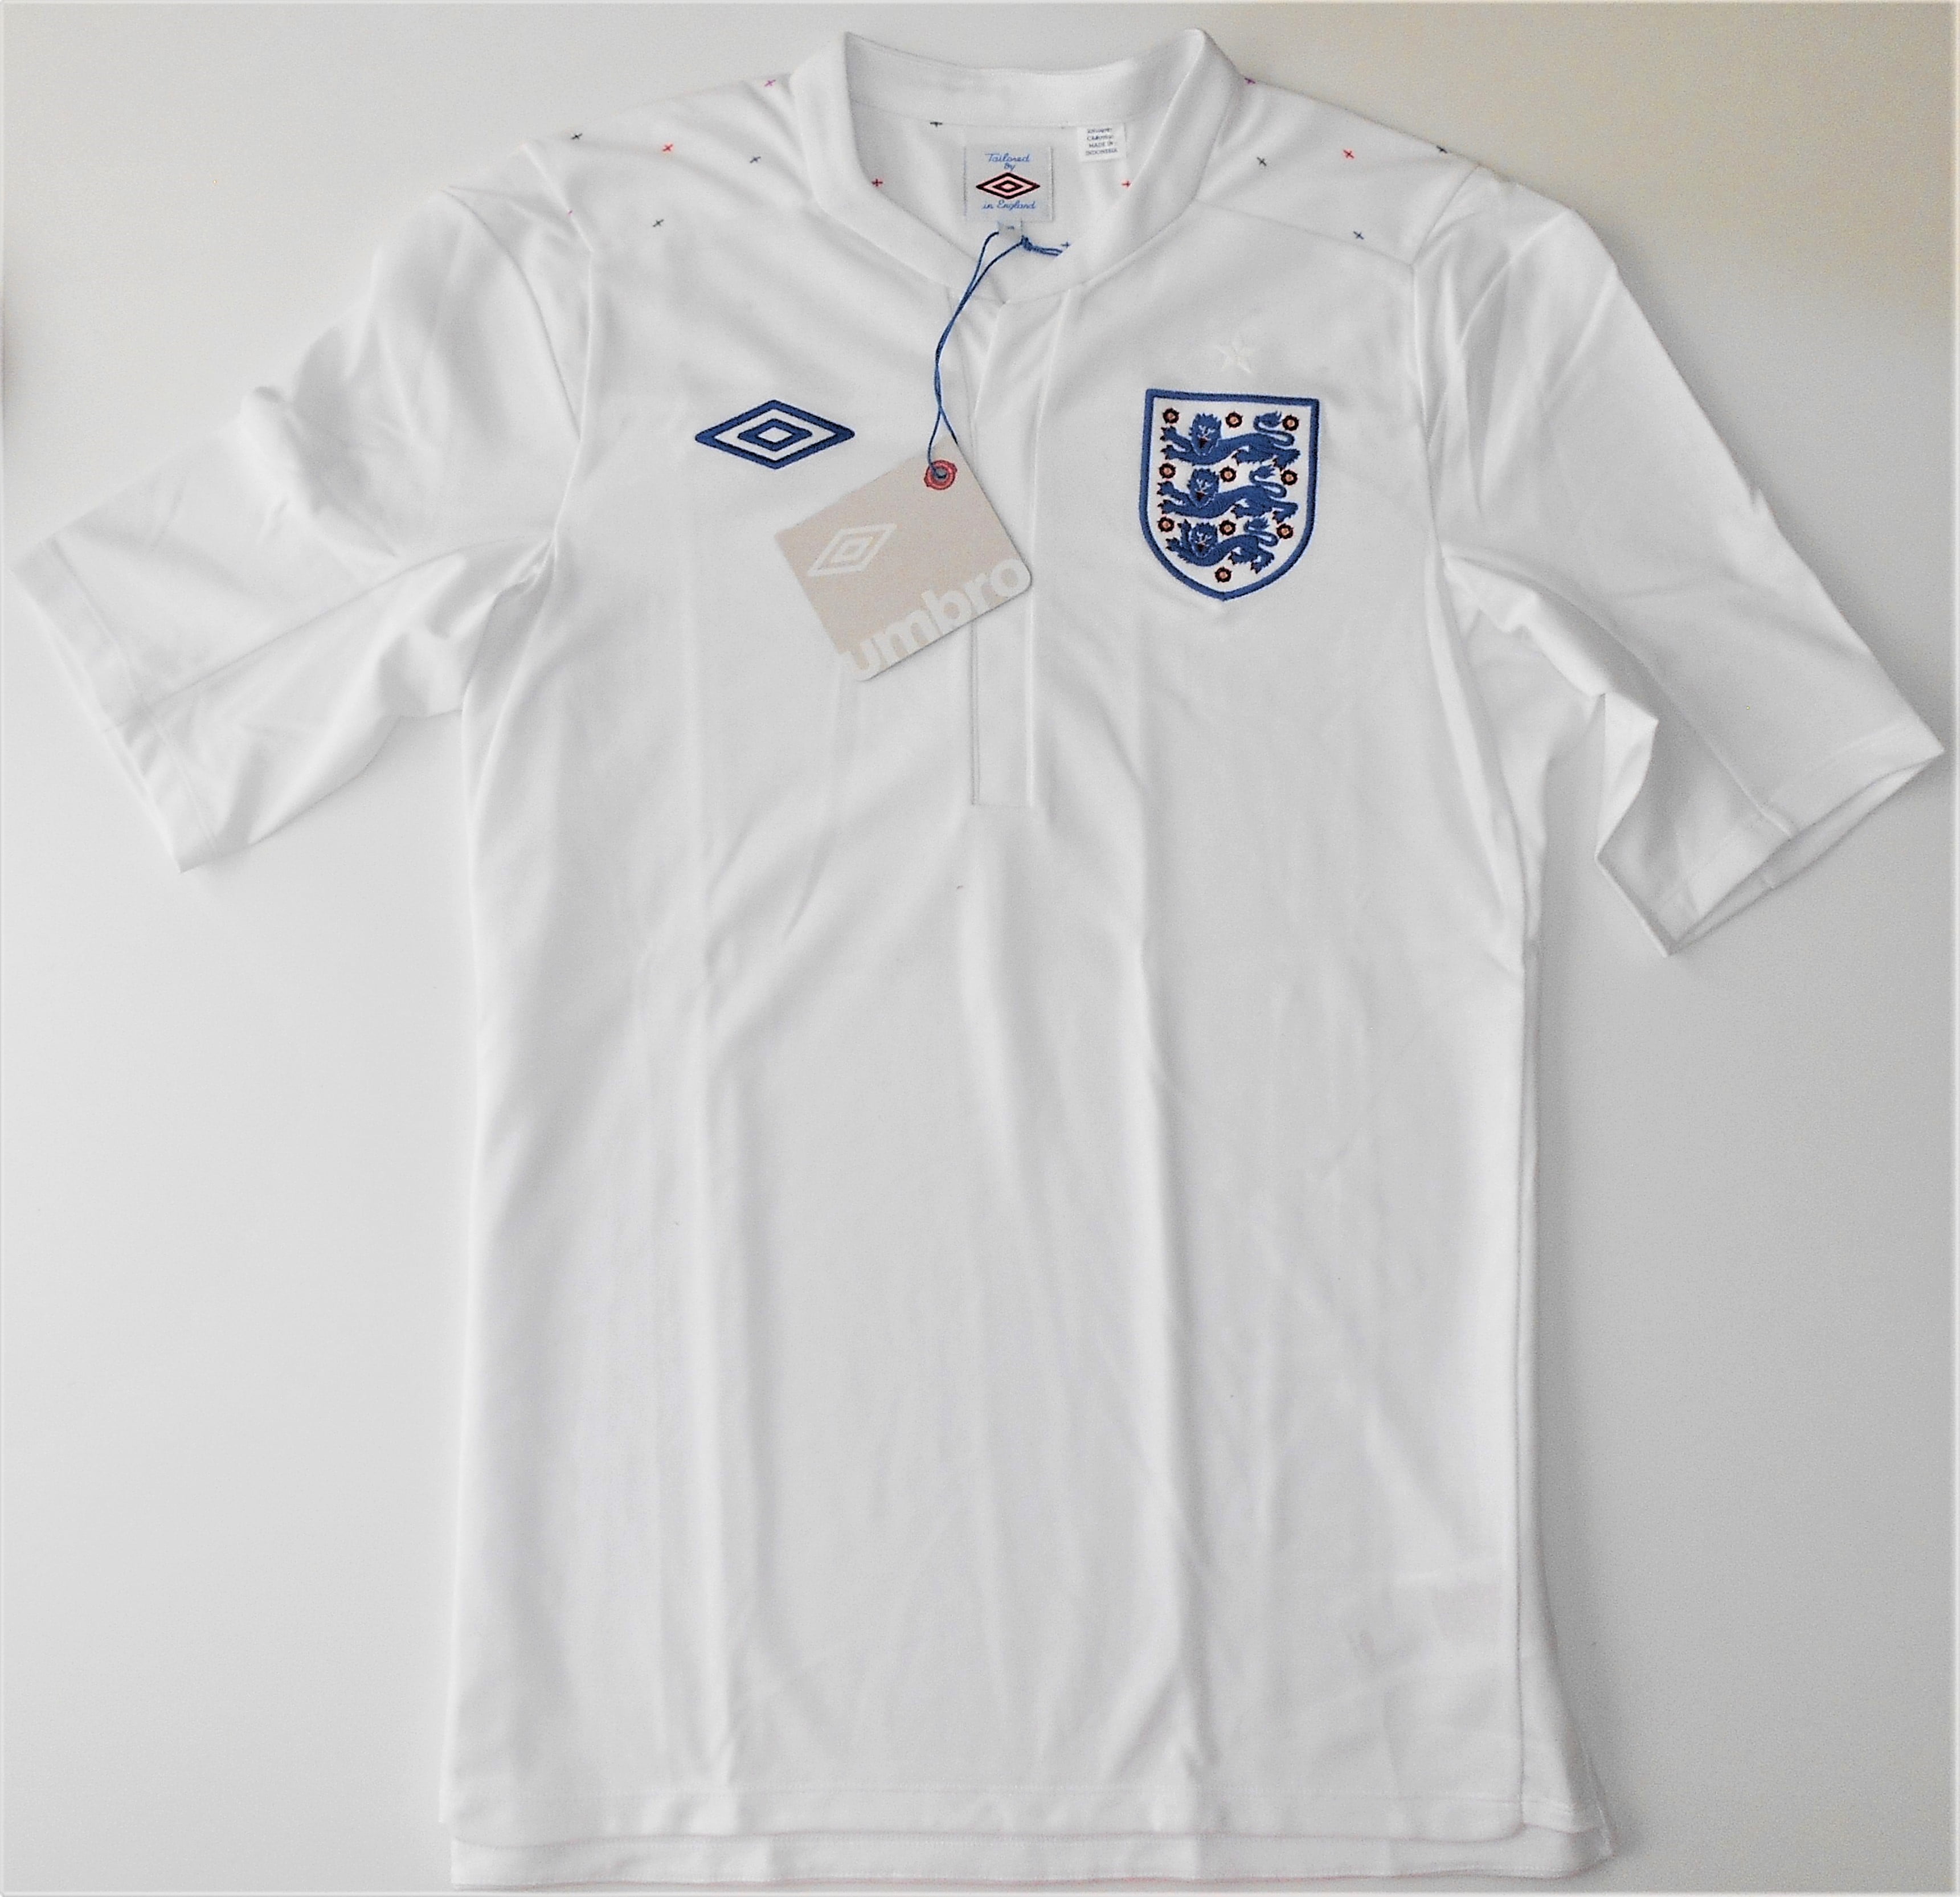 umbro-umbro-men-s-top-tee-shirt-england-sz-38-medium-jersey-white